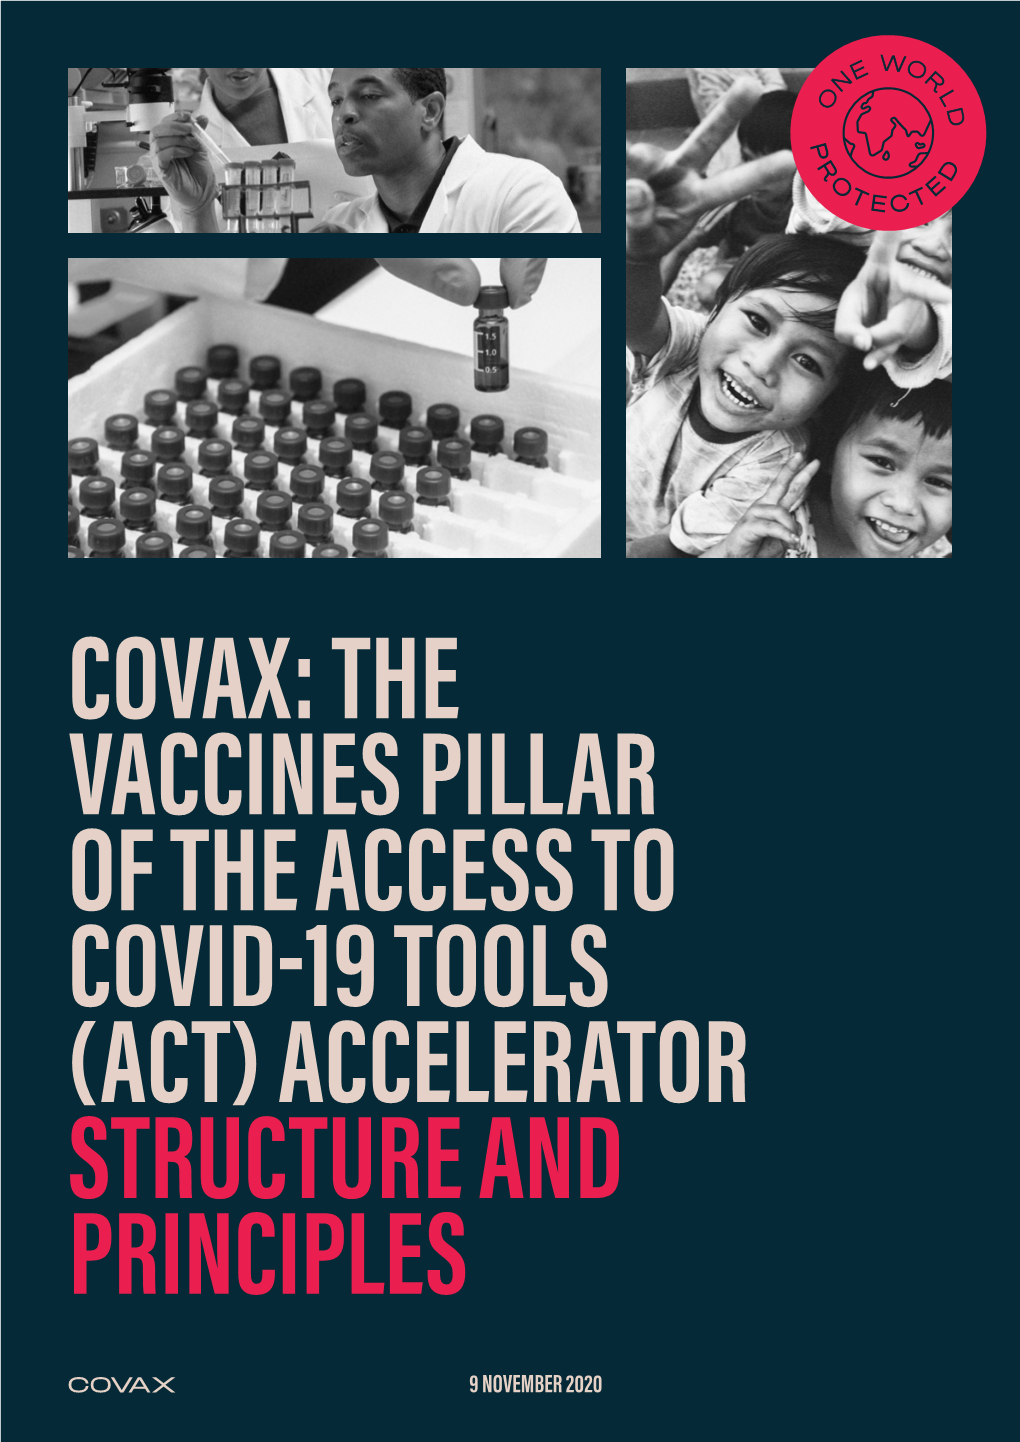 Covax: Structure and Principles 1 9 November 20209 November